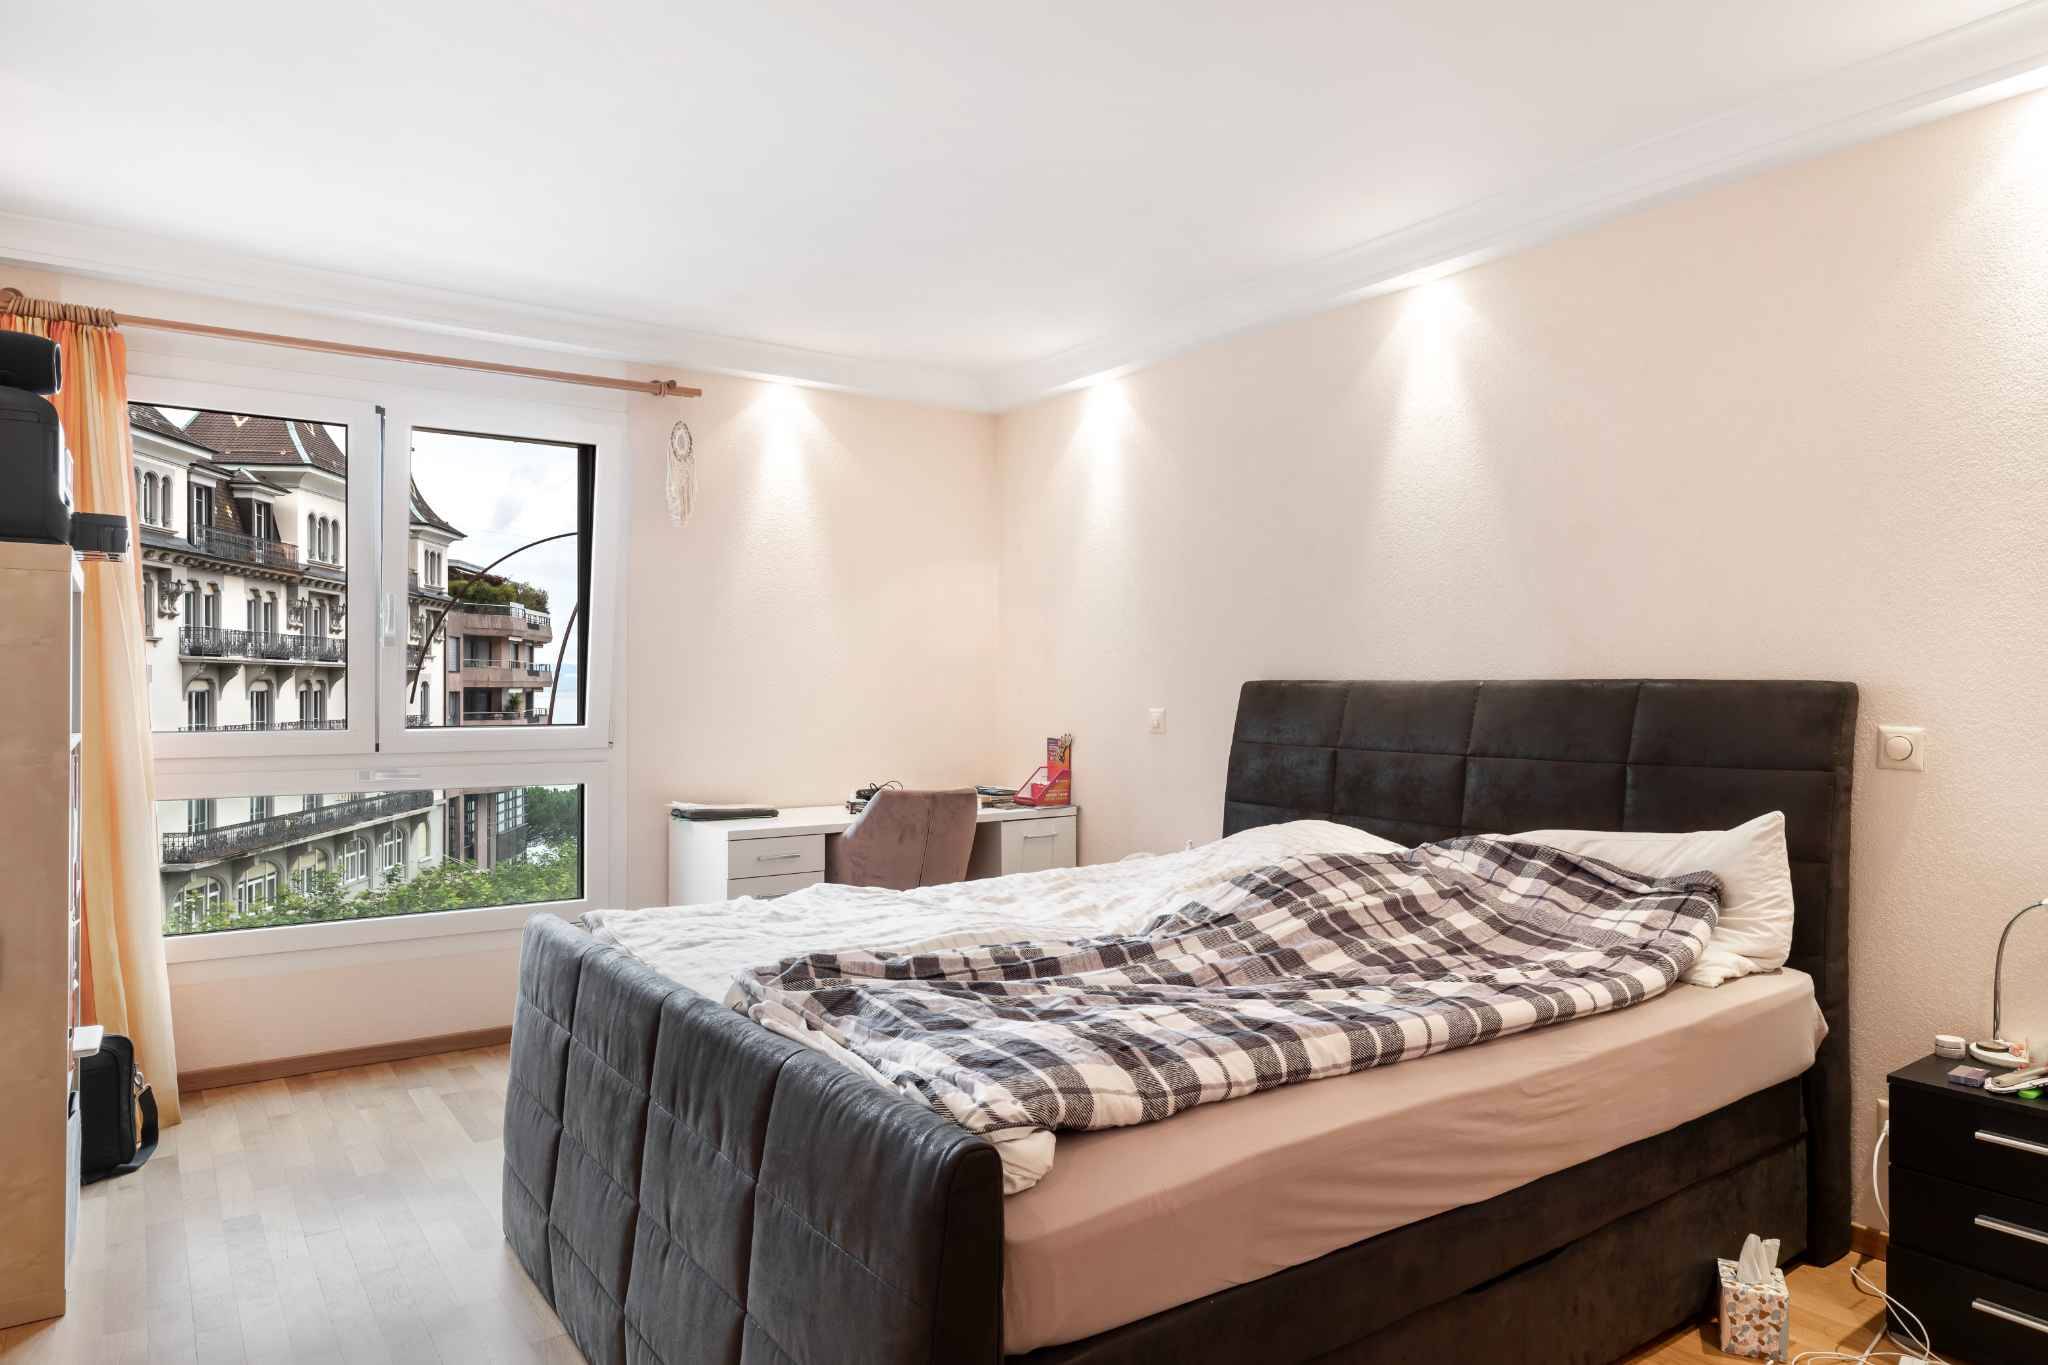 À vendre : Appartement 3 chambres Montreux - Ref : 0904 | Naef Immobilier